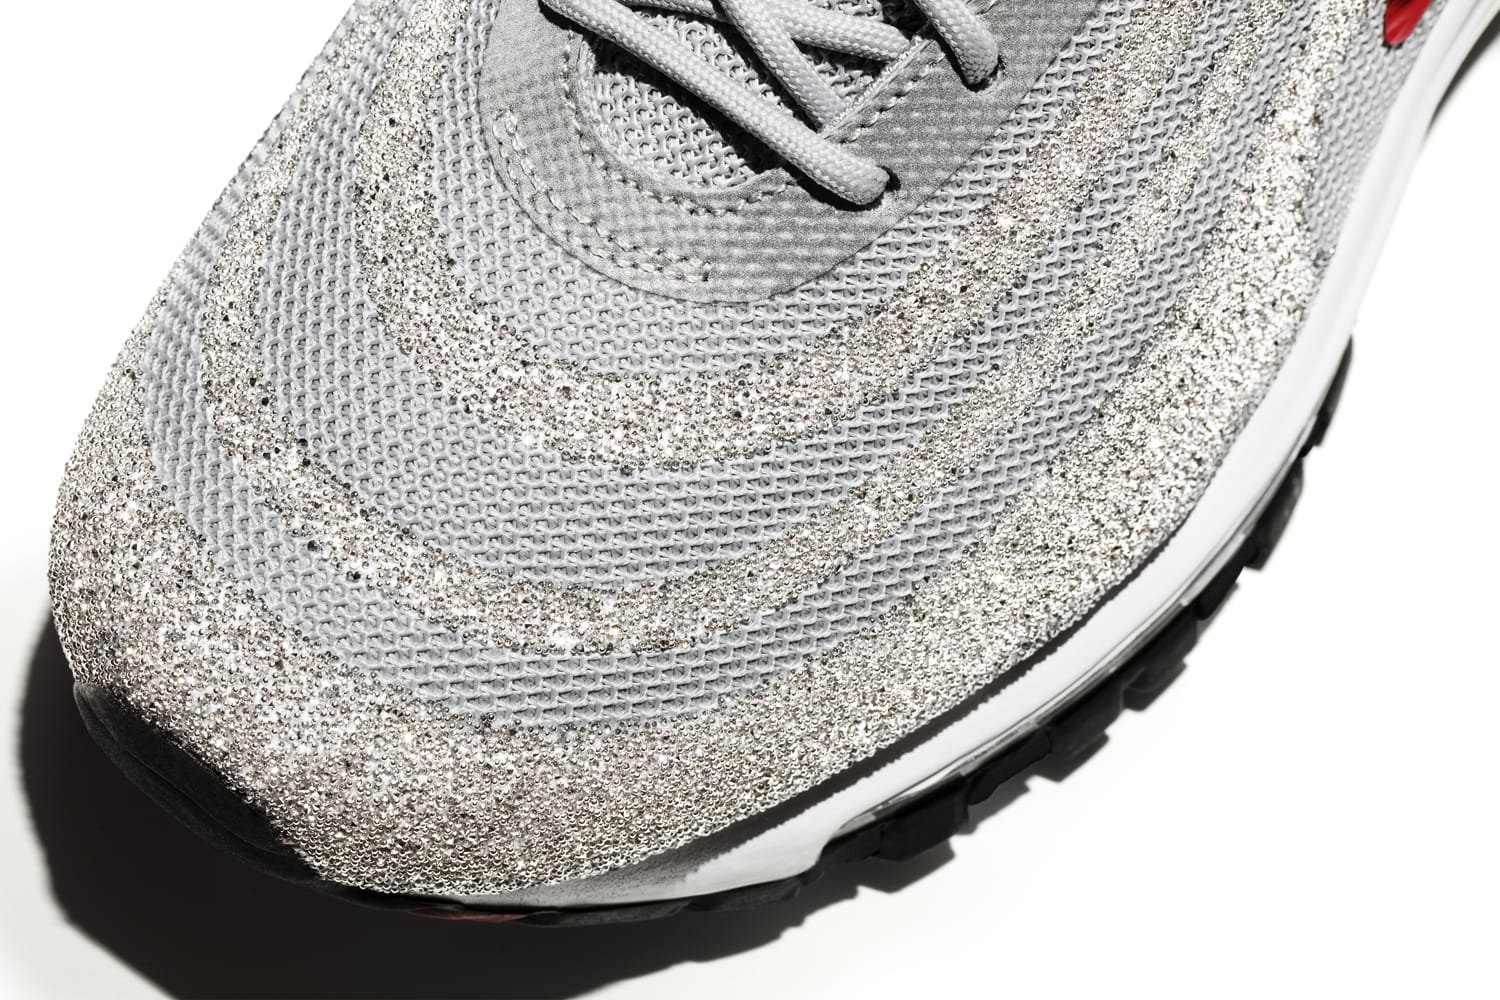 Nike Air Max 97 Swarovski Crystal Silver Toe